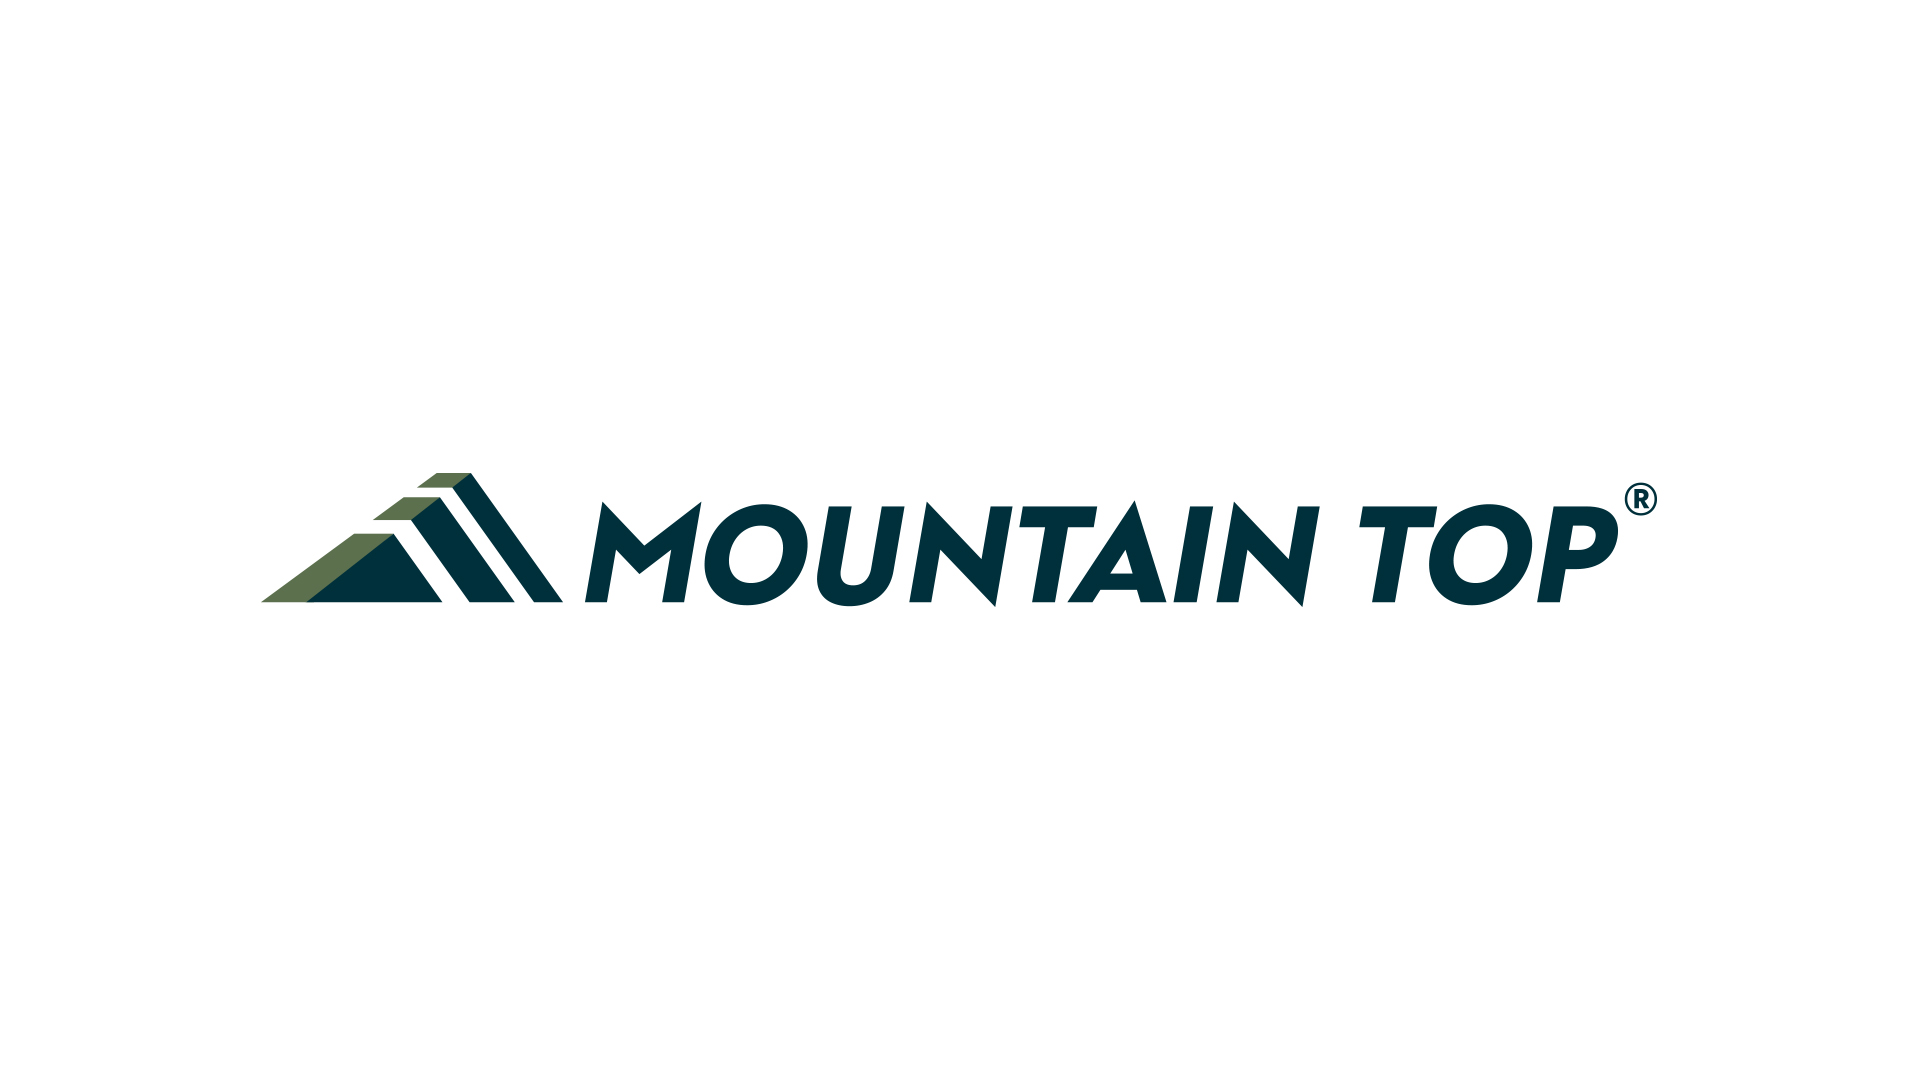 Mountain Top • Global leader aluminium roll covers for pickup trucks